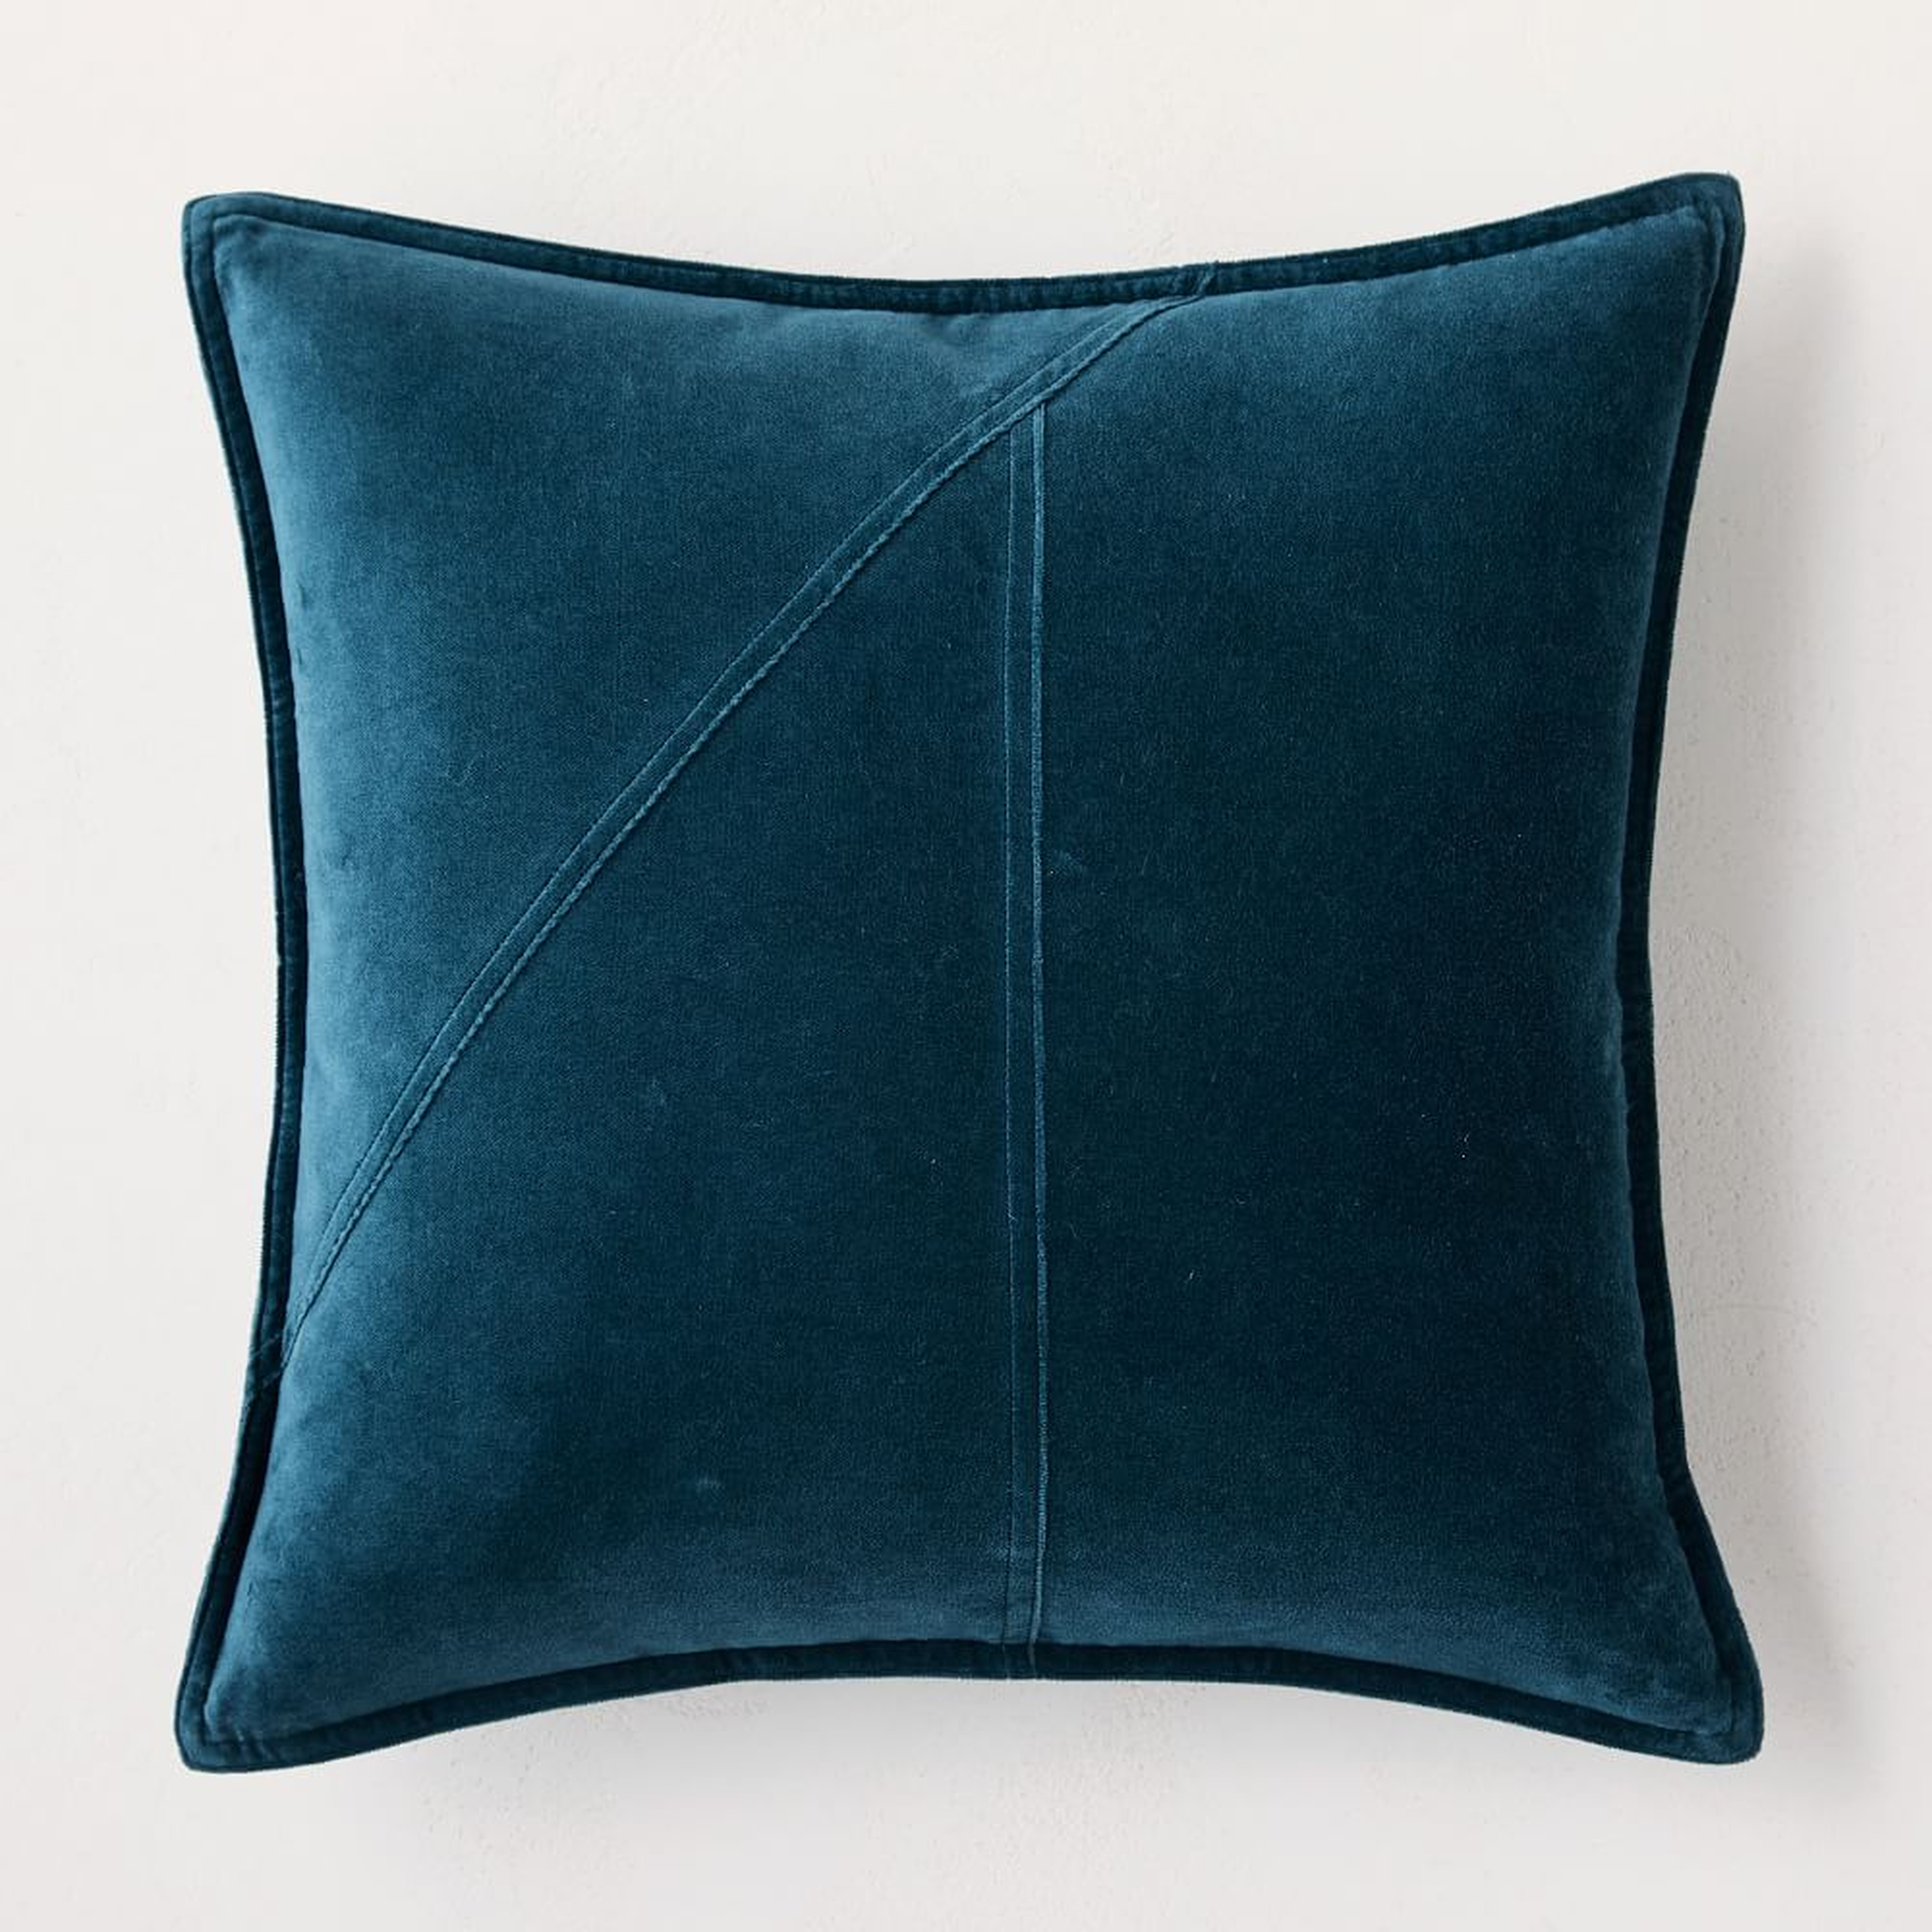 Washed Cotton Velvet Pillow Cover, 18"x18", Teal Blue, Set of 2 - West Elm